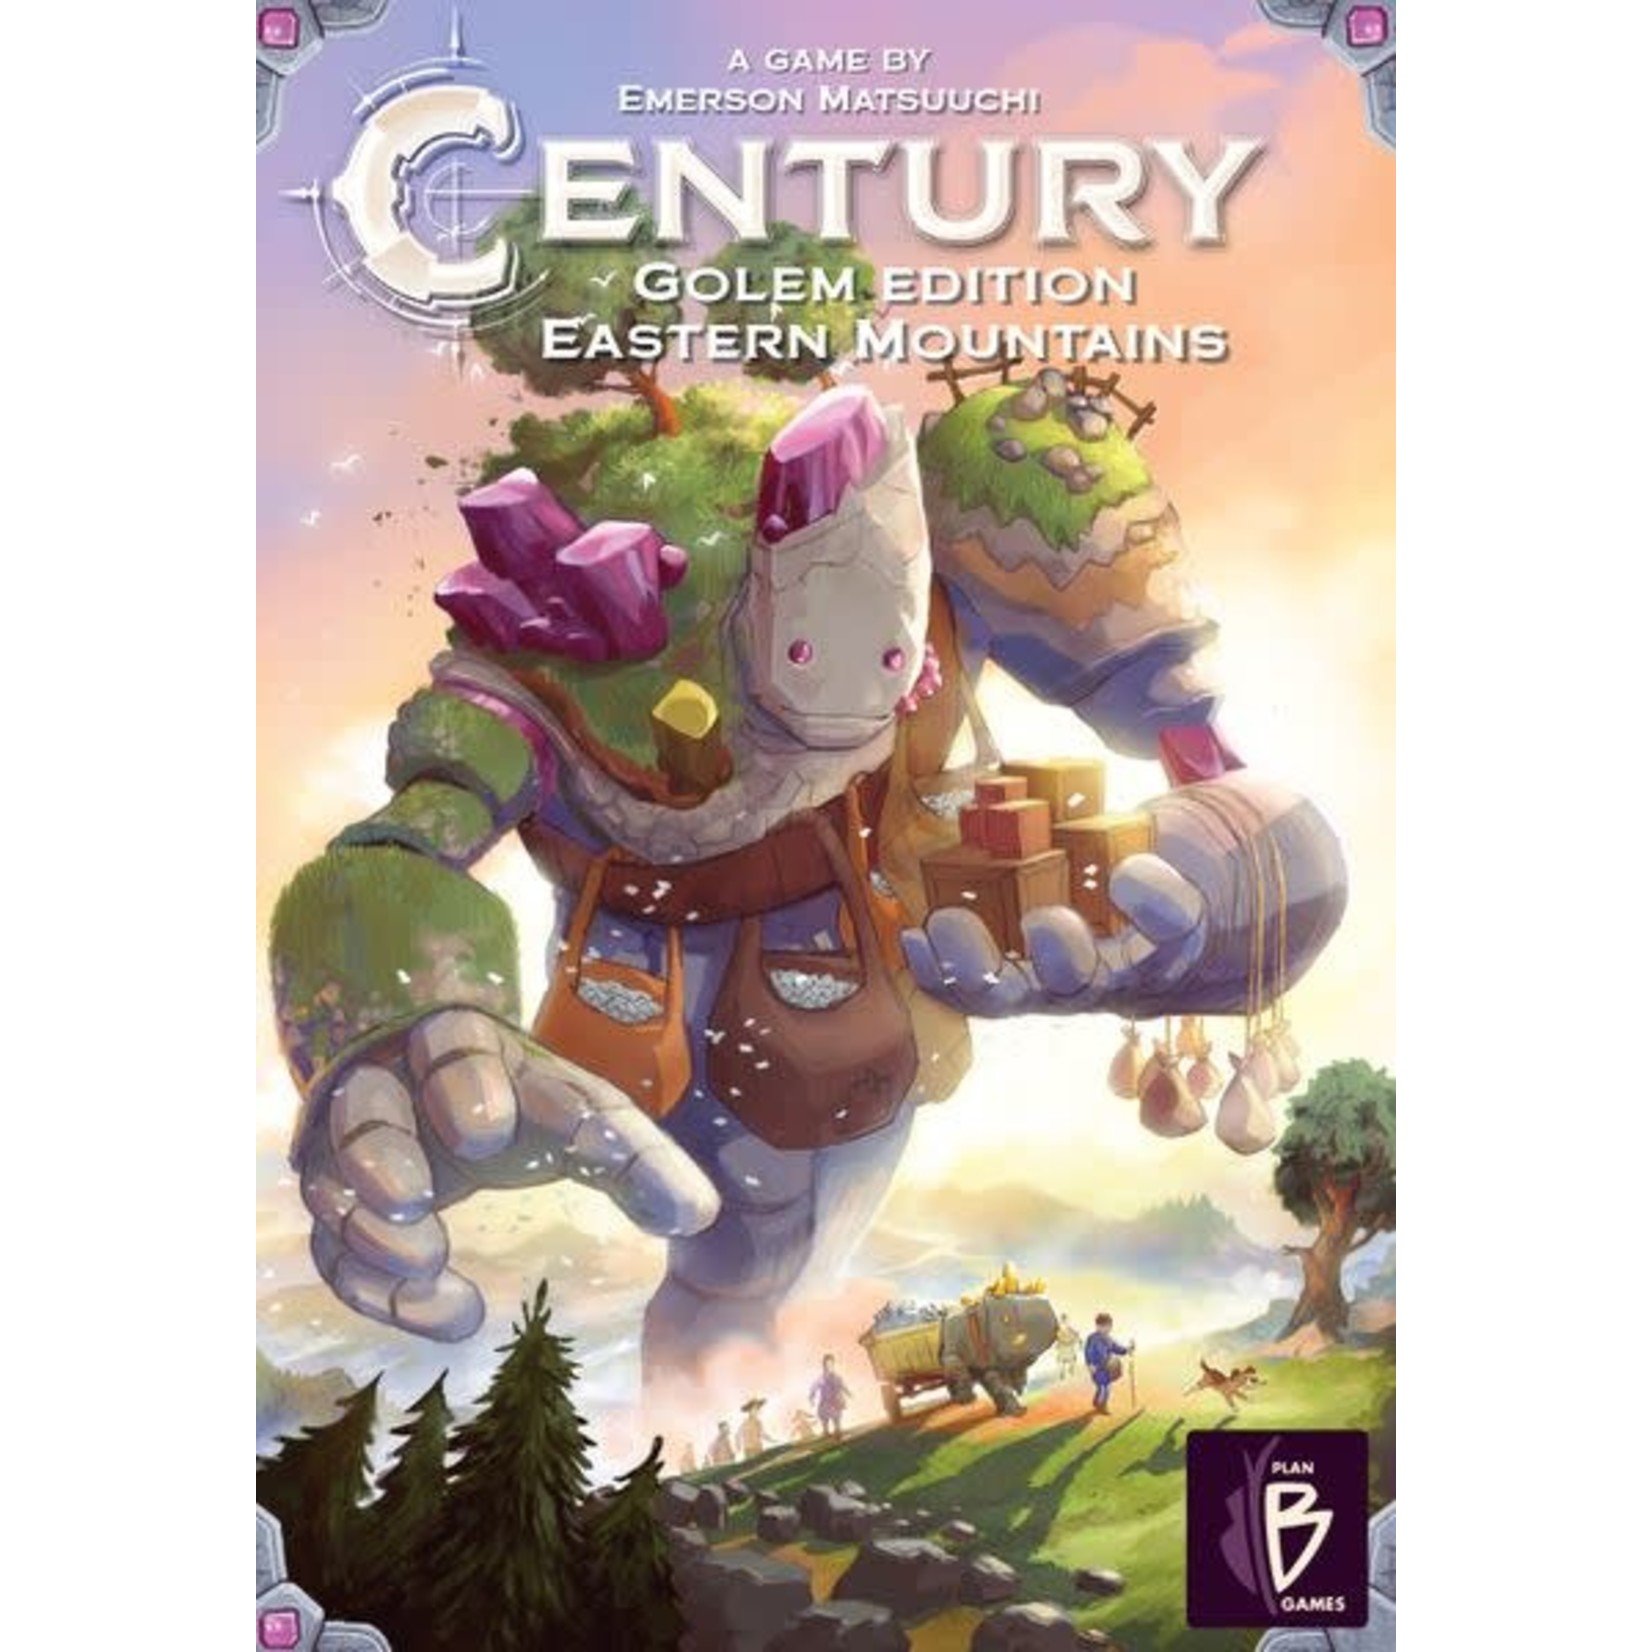 PlanBGames Century: Golem Edition Eastern Mountains